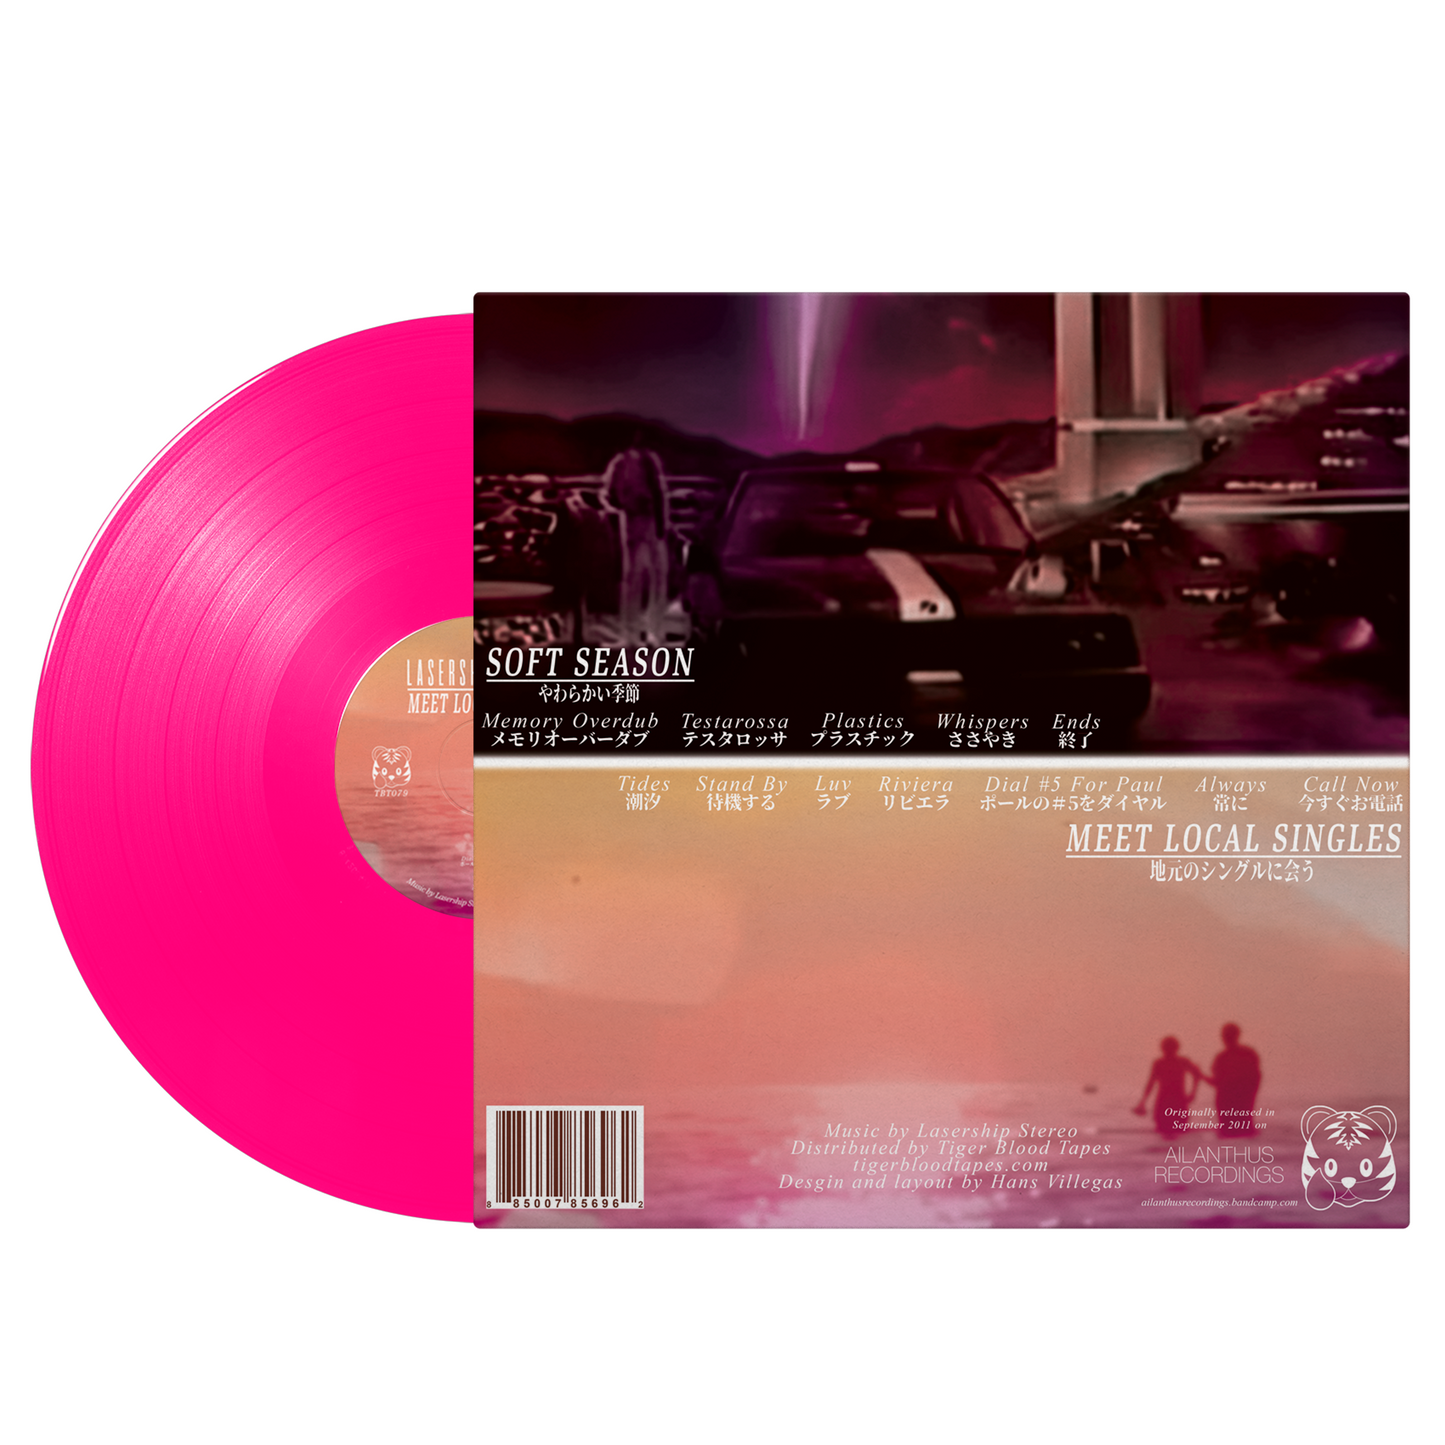 Lasership Stereo - "Soft Season & Meet Local Singles" Limited Edition Hot Pink 12" Vinyl LP